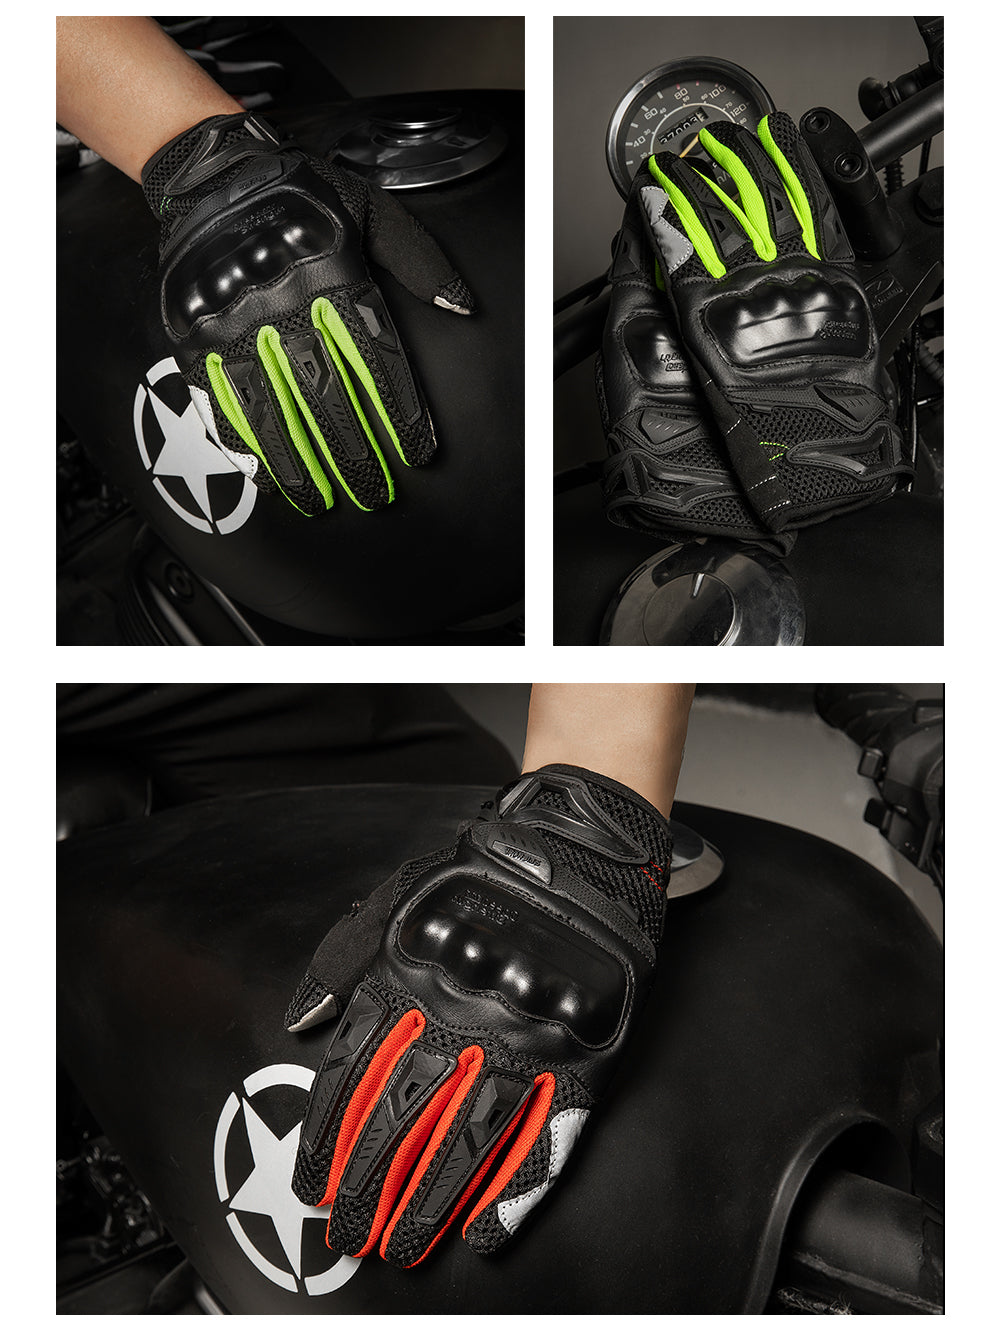 Gants de moto d'été de fer JIA Hommes tactile écran respirant MotoBike Moto moto moto motocrien motocross gants de motocross